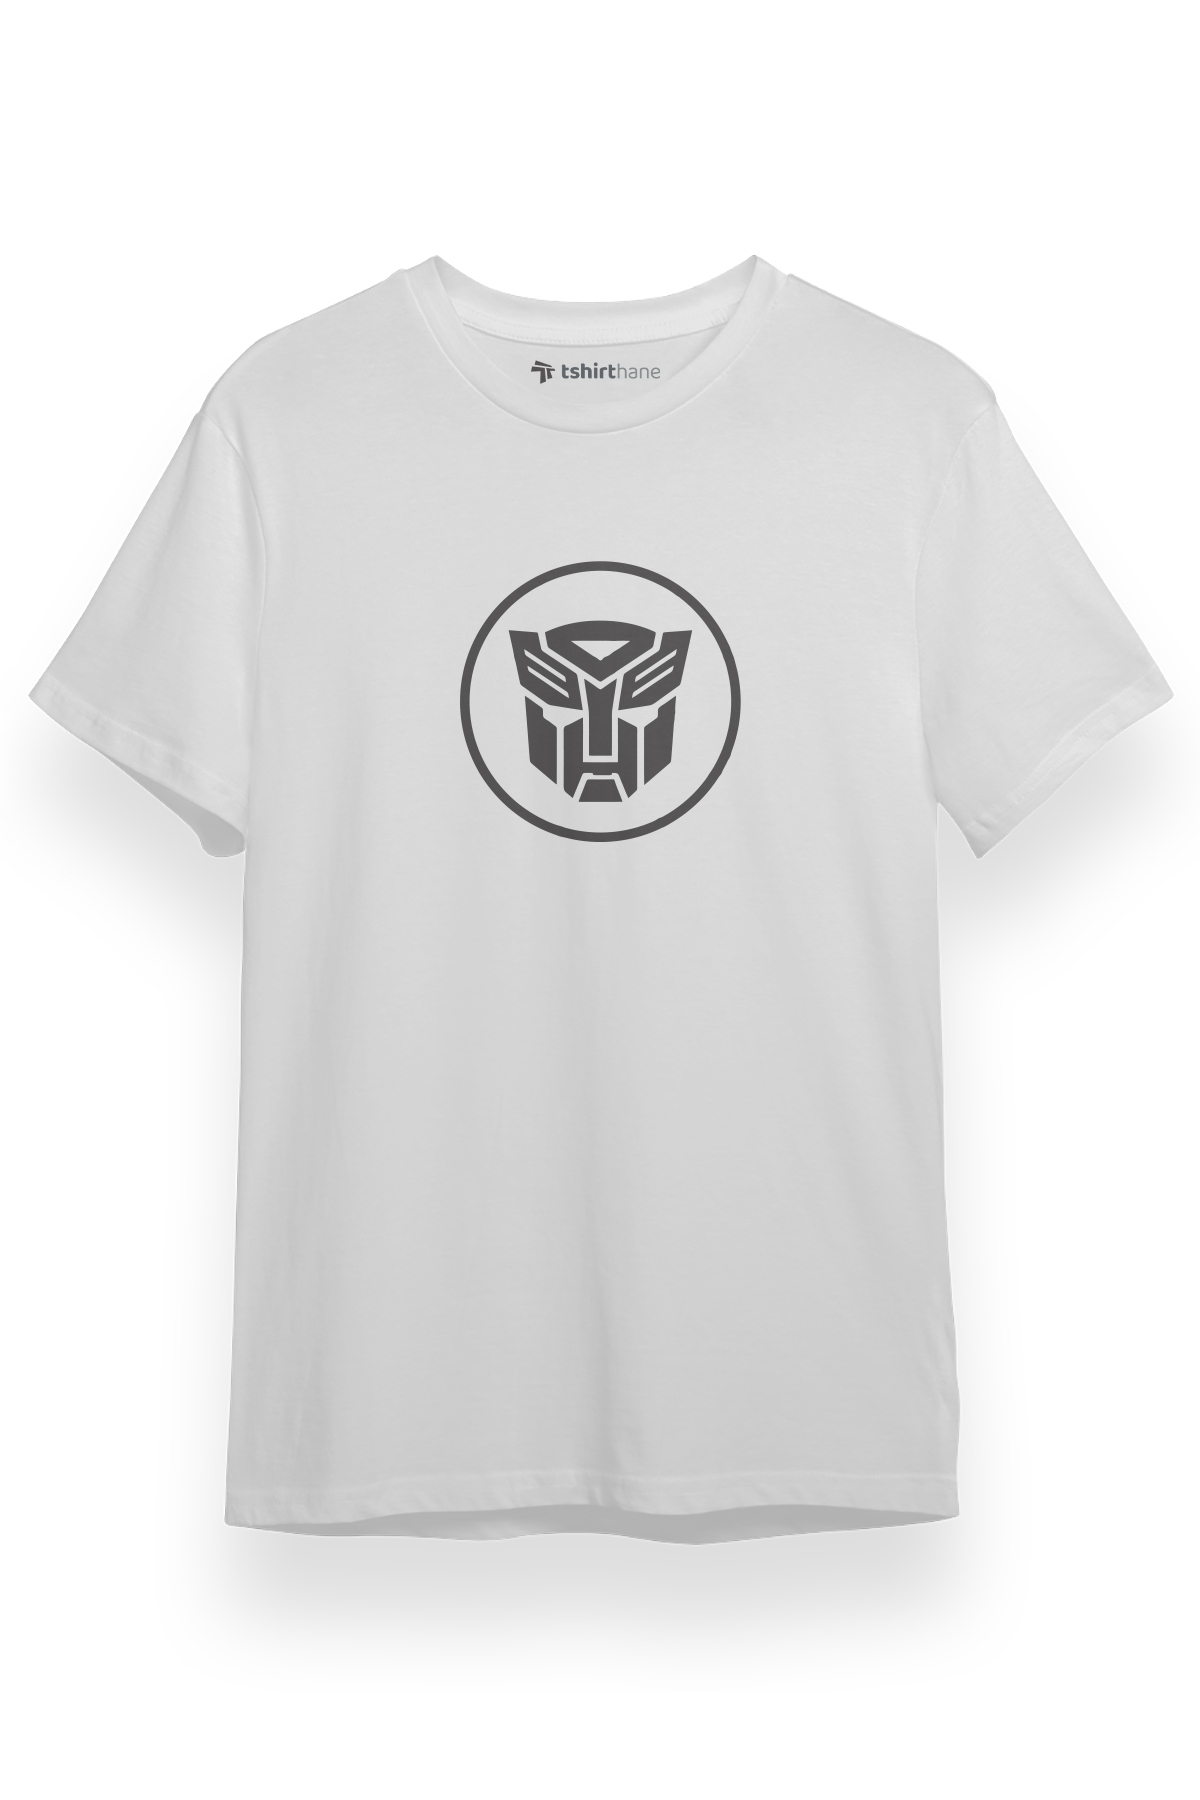 Transformers Autobot Icon Beyaz Kısa kol Erkek Tshirt